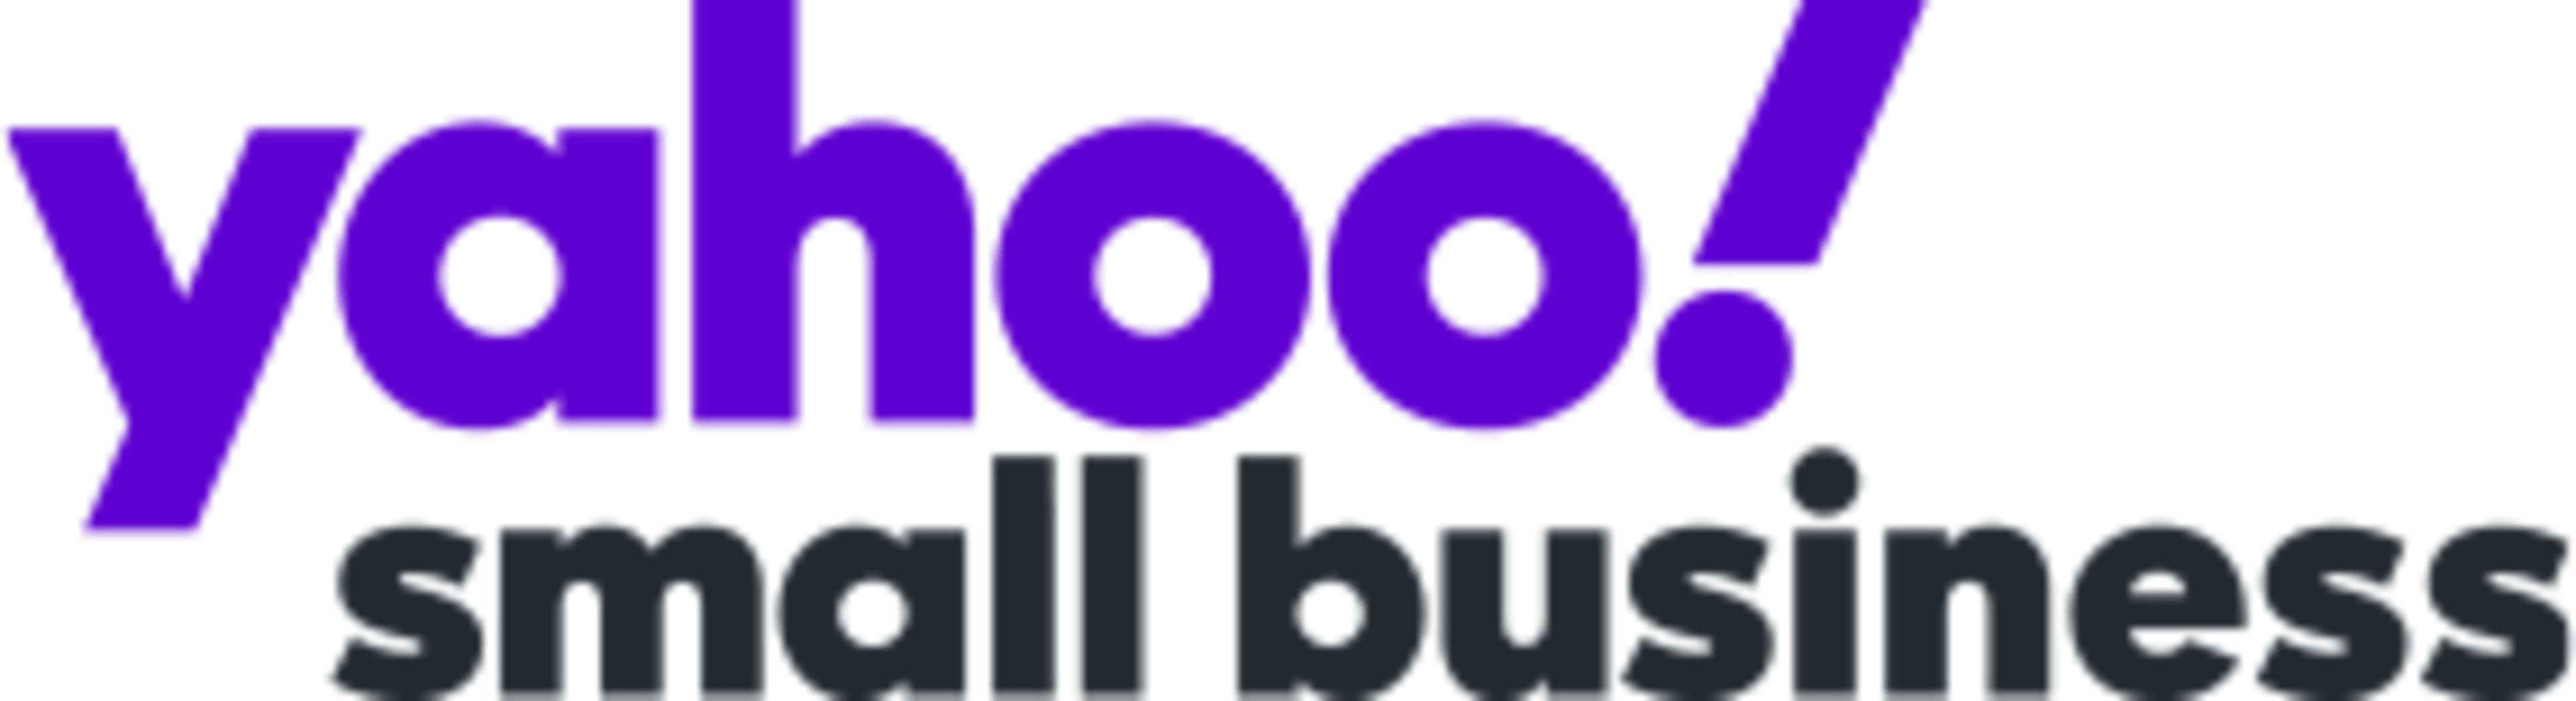 Yahoo Small BusinessCode